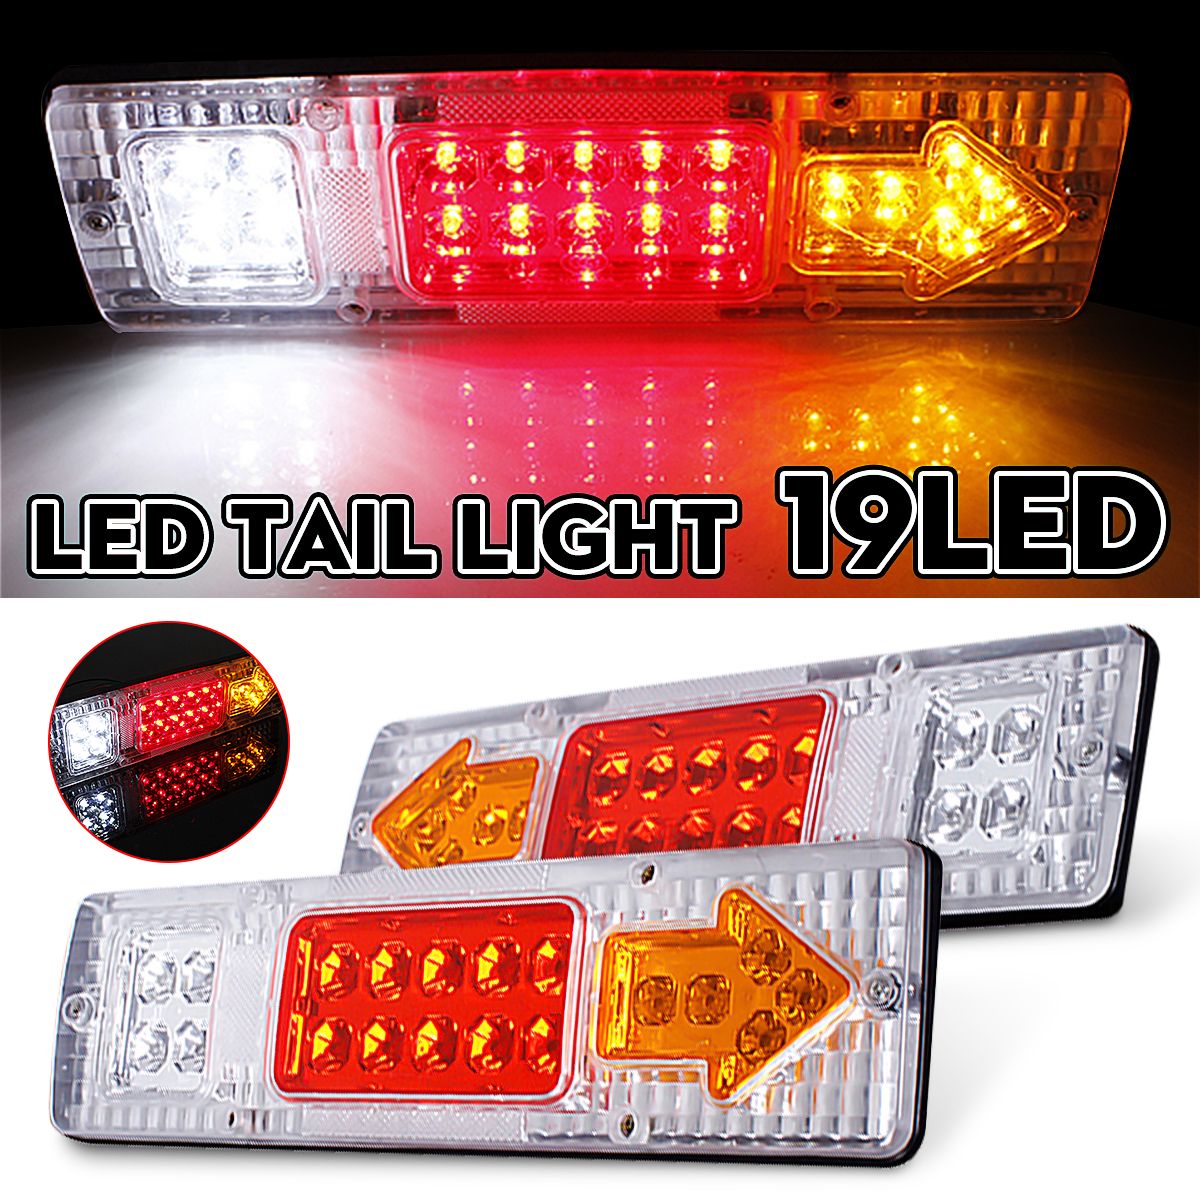 2Pcs-12V-19-LED-Tear-Tail-Stop-Light-Turn-Indicator-Lamp-For-Car-Truck-Trailer-947233